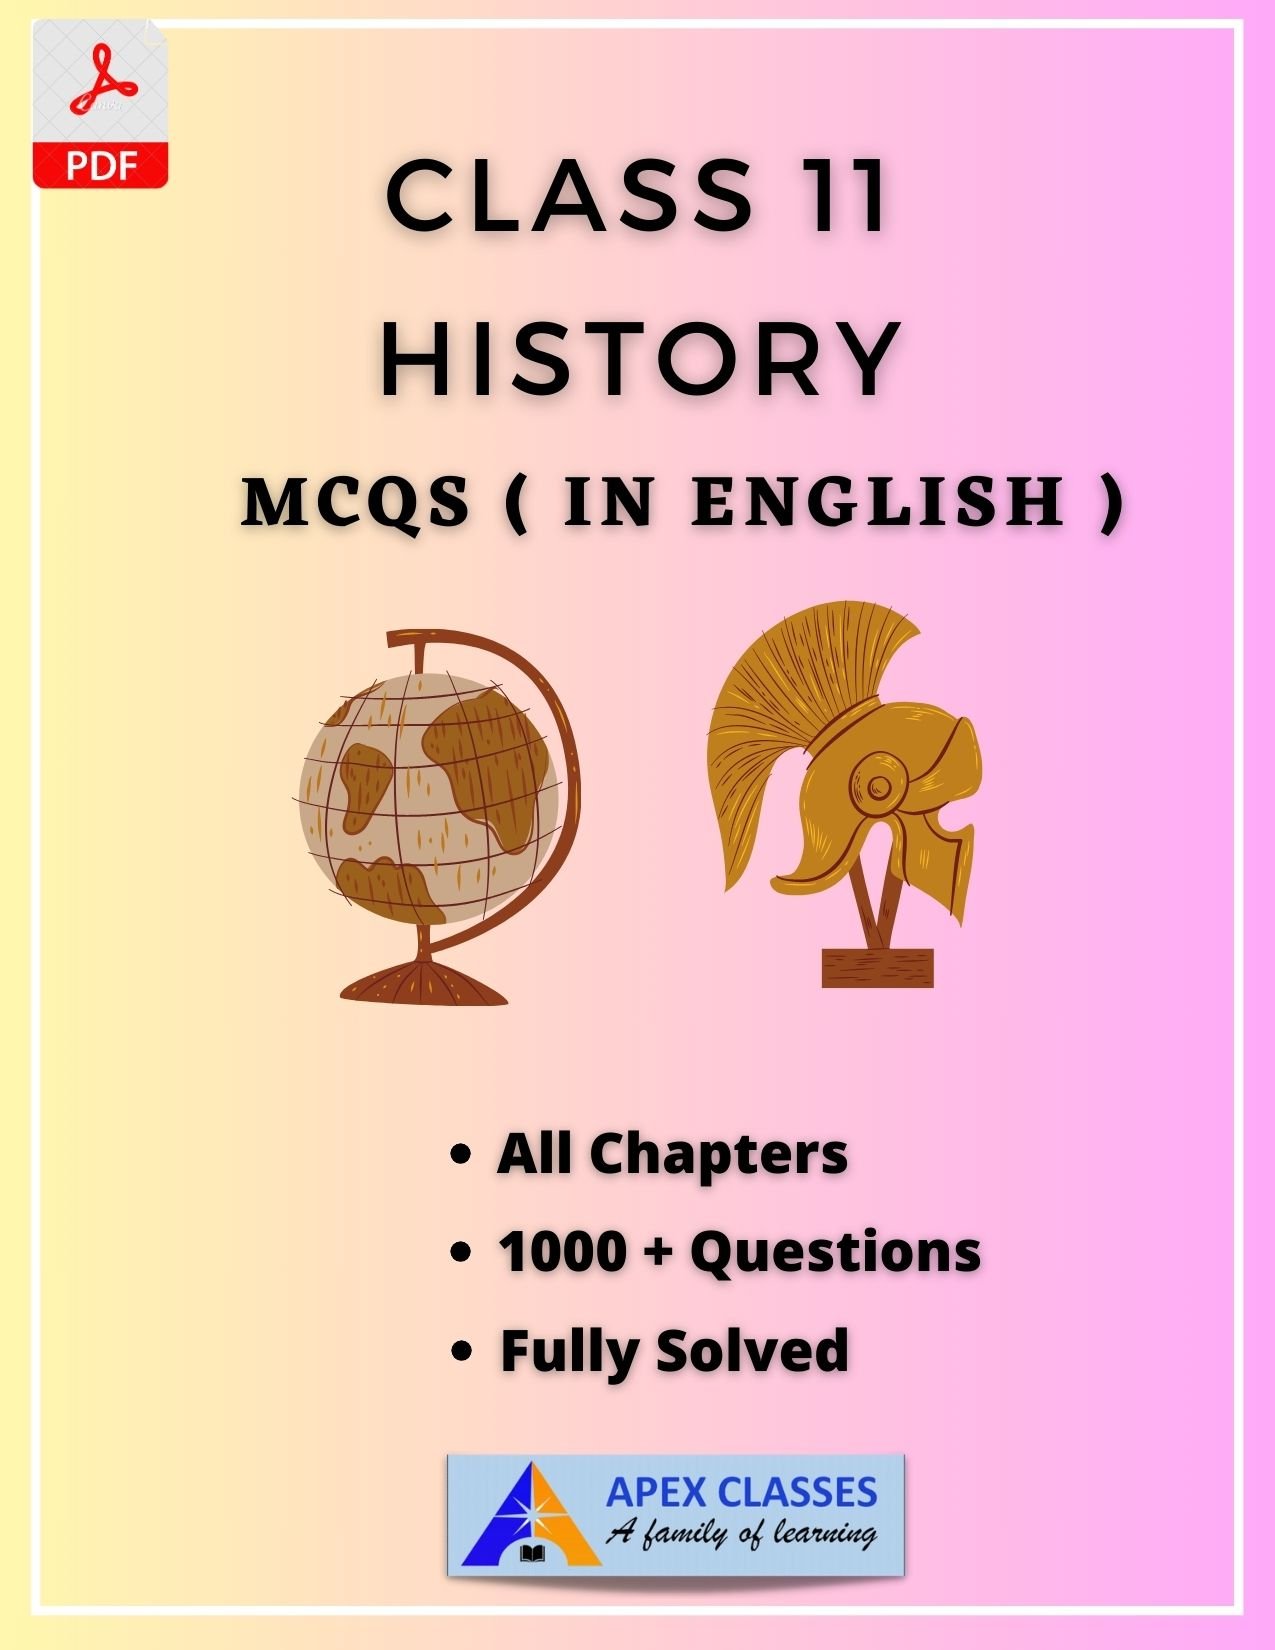 Class 11 History MCQs pdf in English